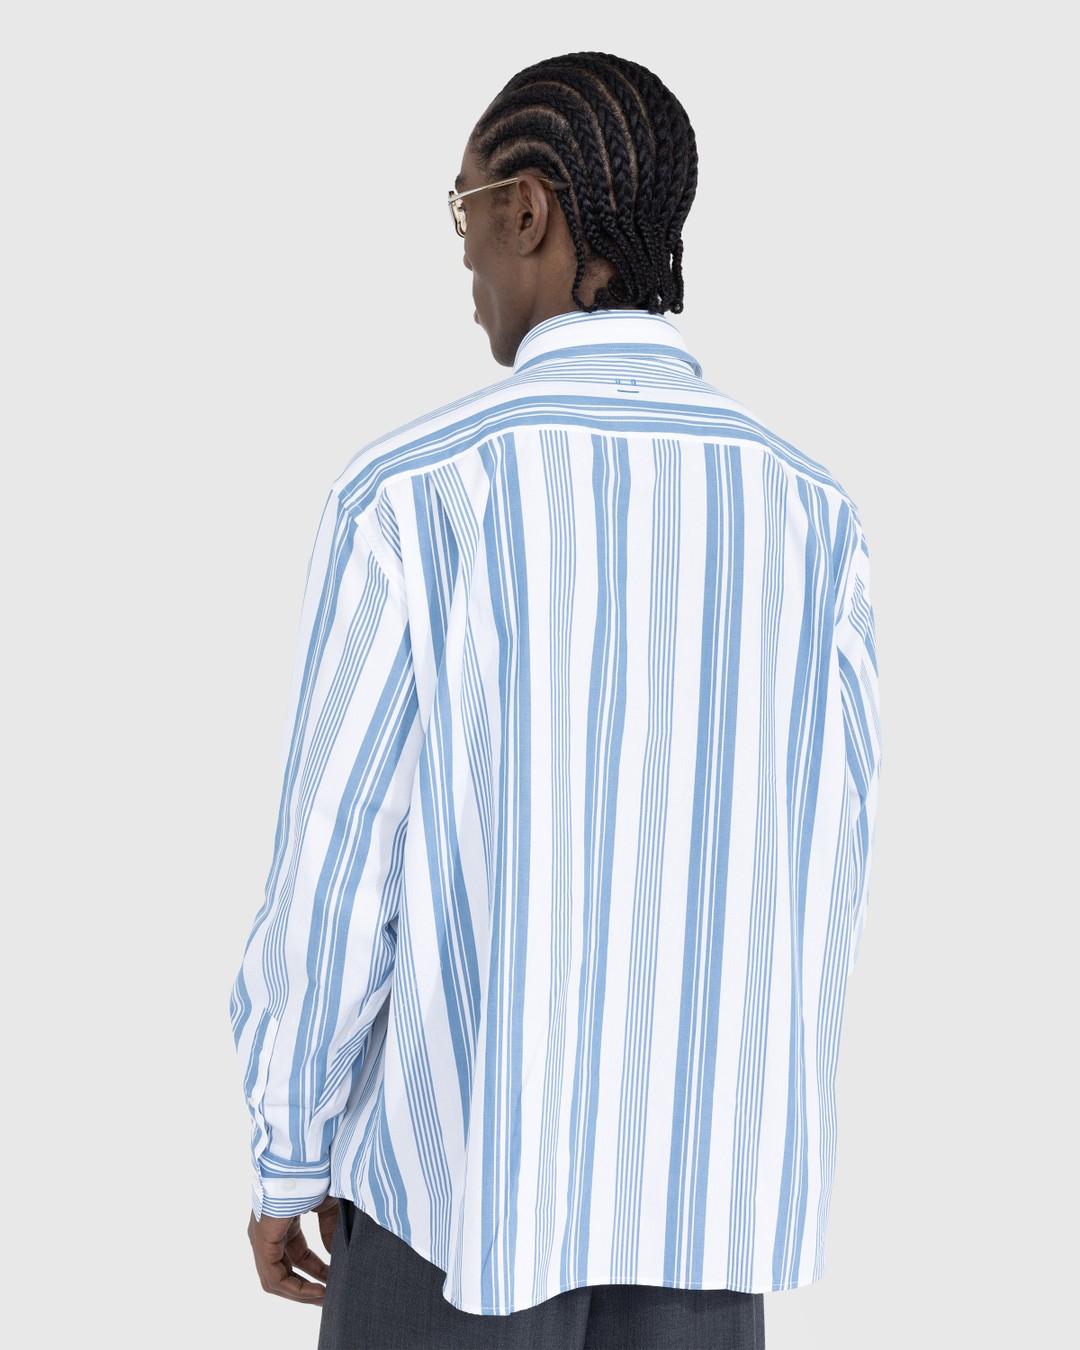 Acne Studios – Stripe Button-Up Shirt White/Steel Blue - Shirts - White - Image 3